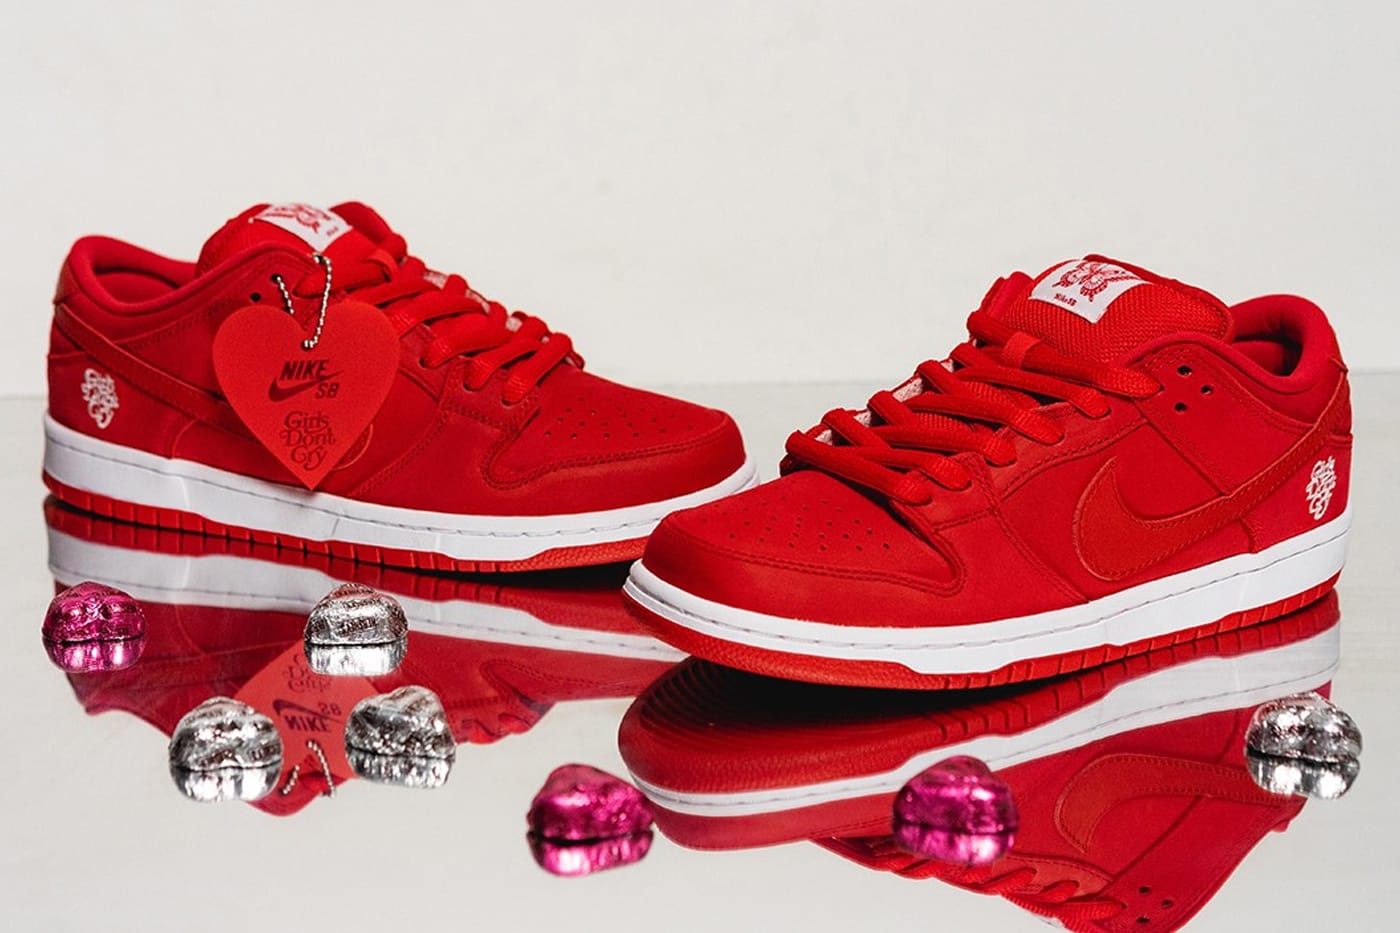 Nike Air Force One 314194 600 Red Sneakers Vintage Leather | Red sneakers,  Nike air force ones, Vintage leather